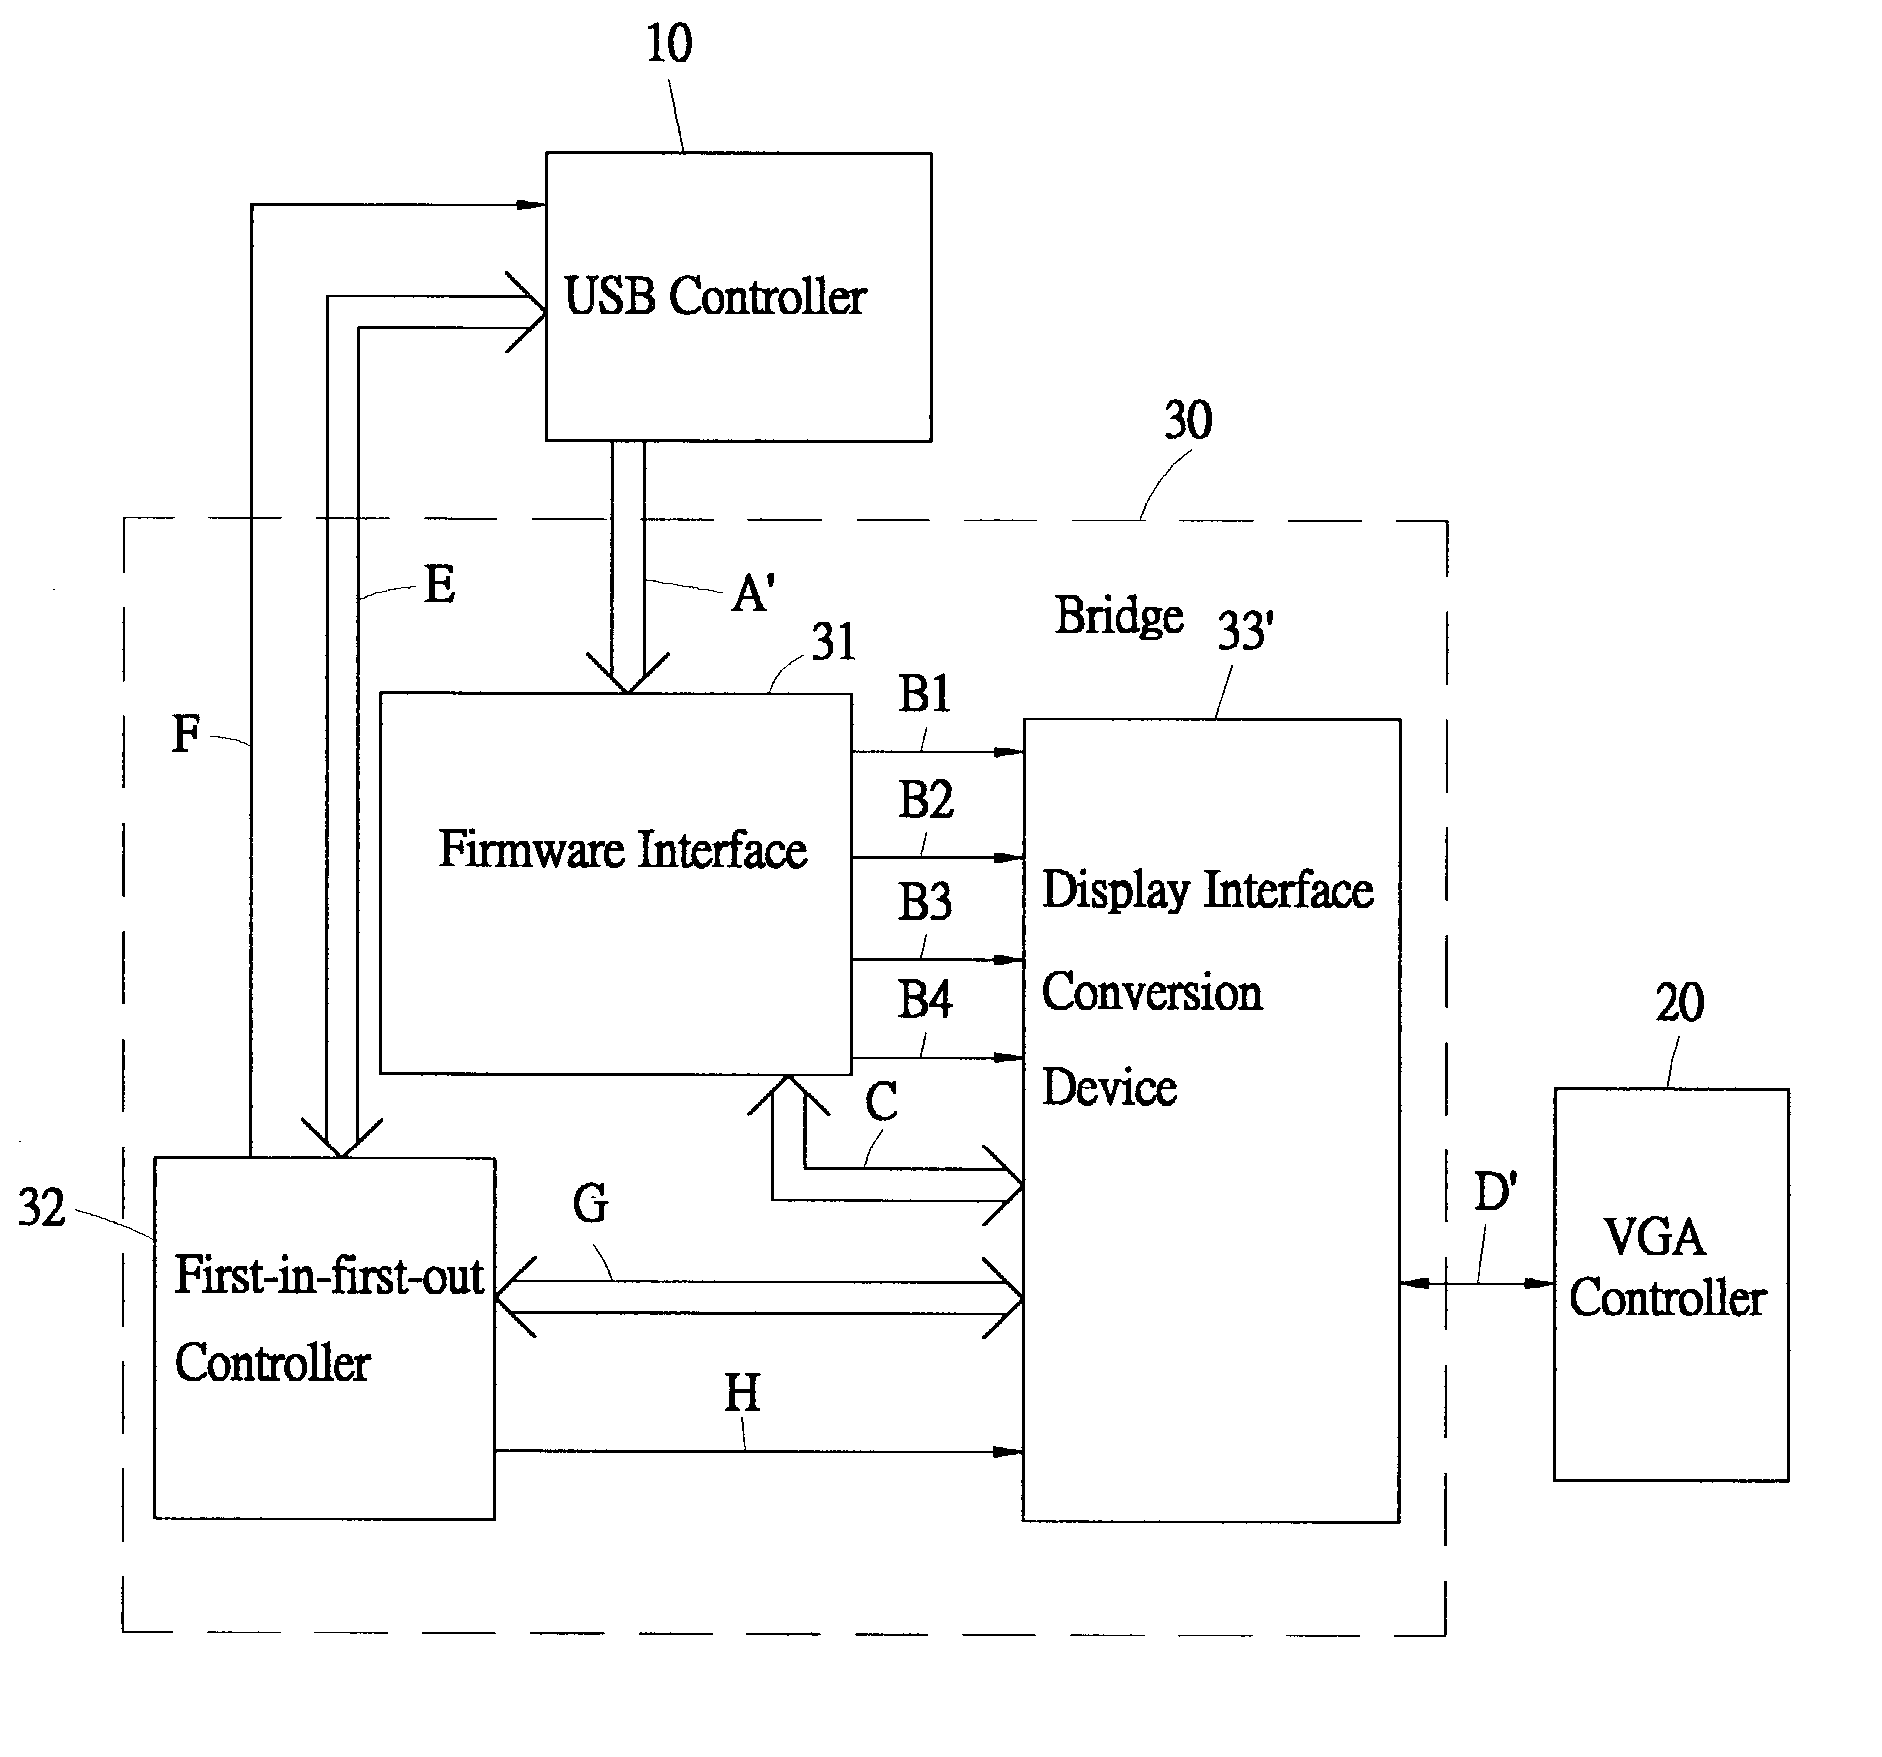 USB-to-VGA converter